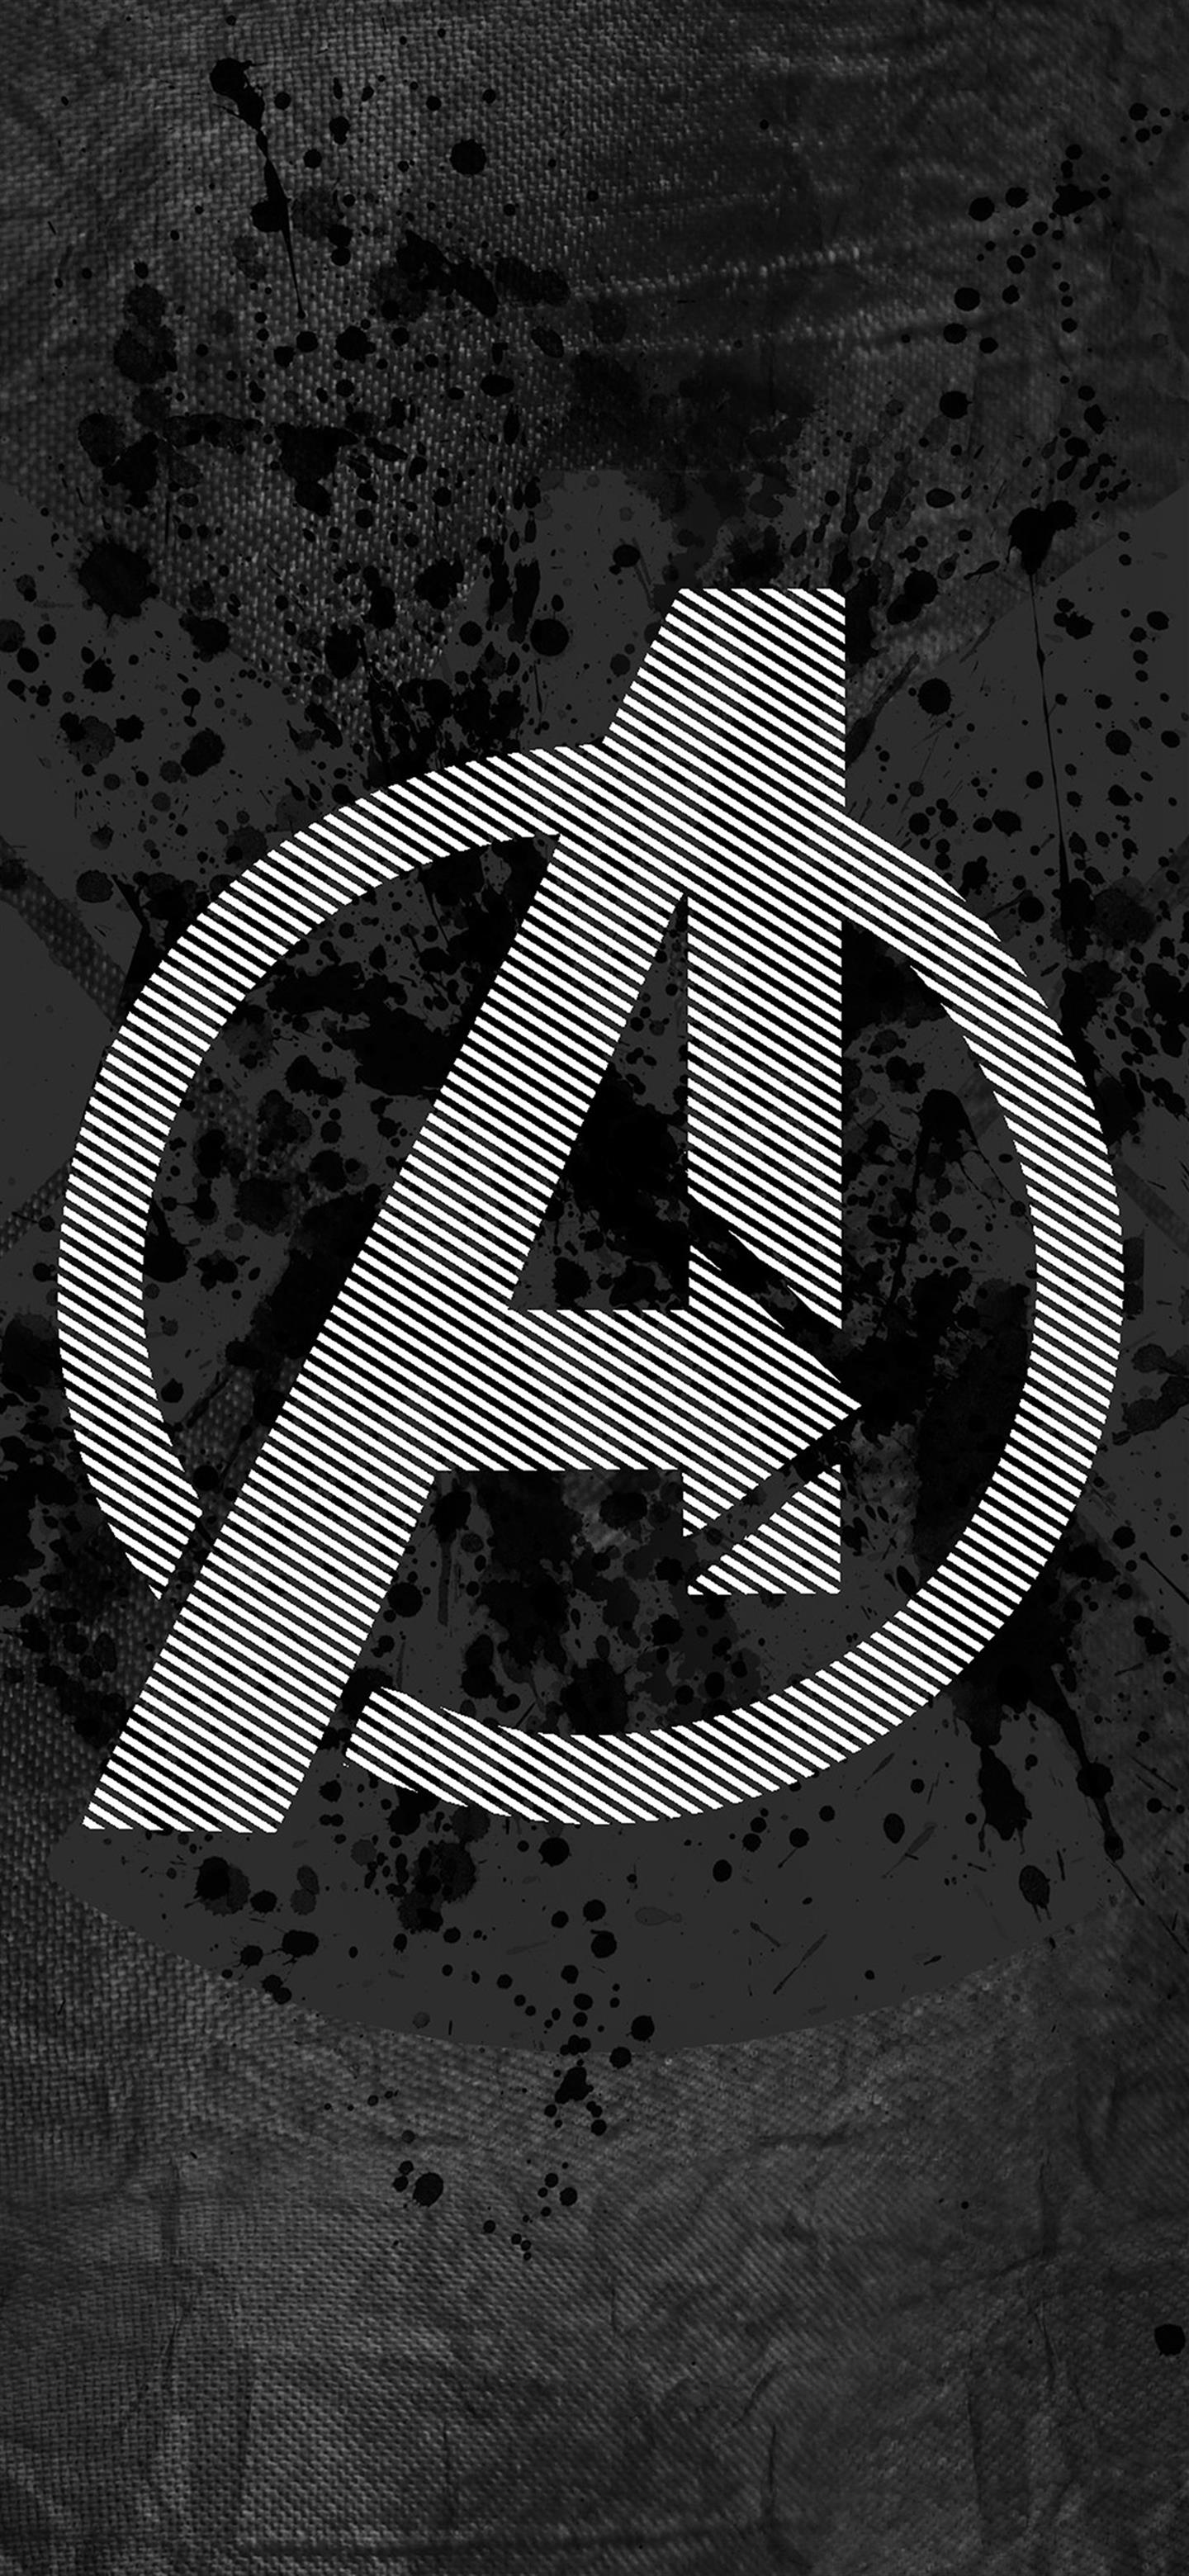 Avengers logo art Phone Wallpaper Download